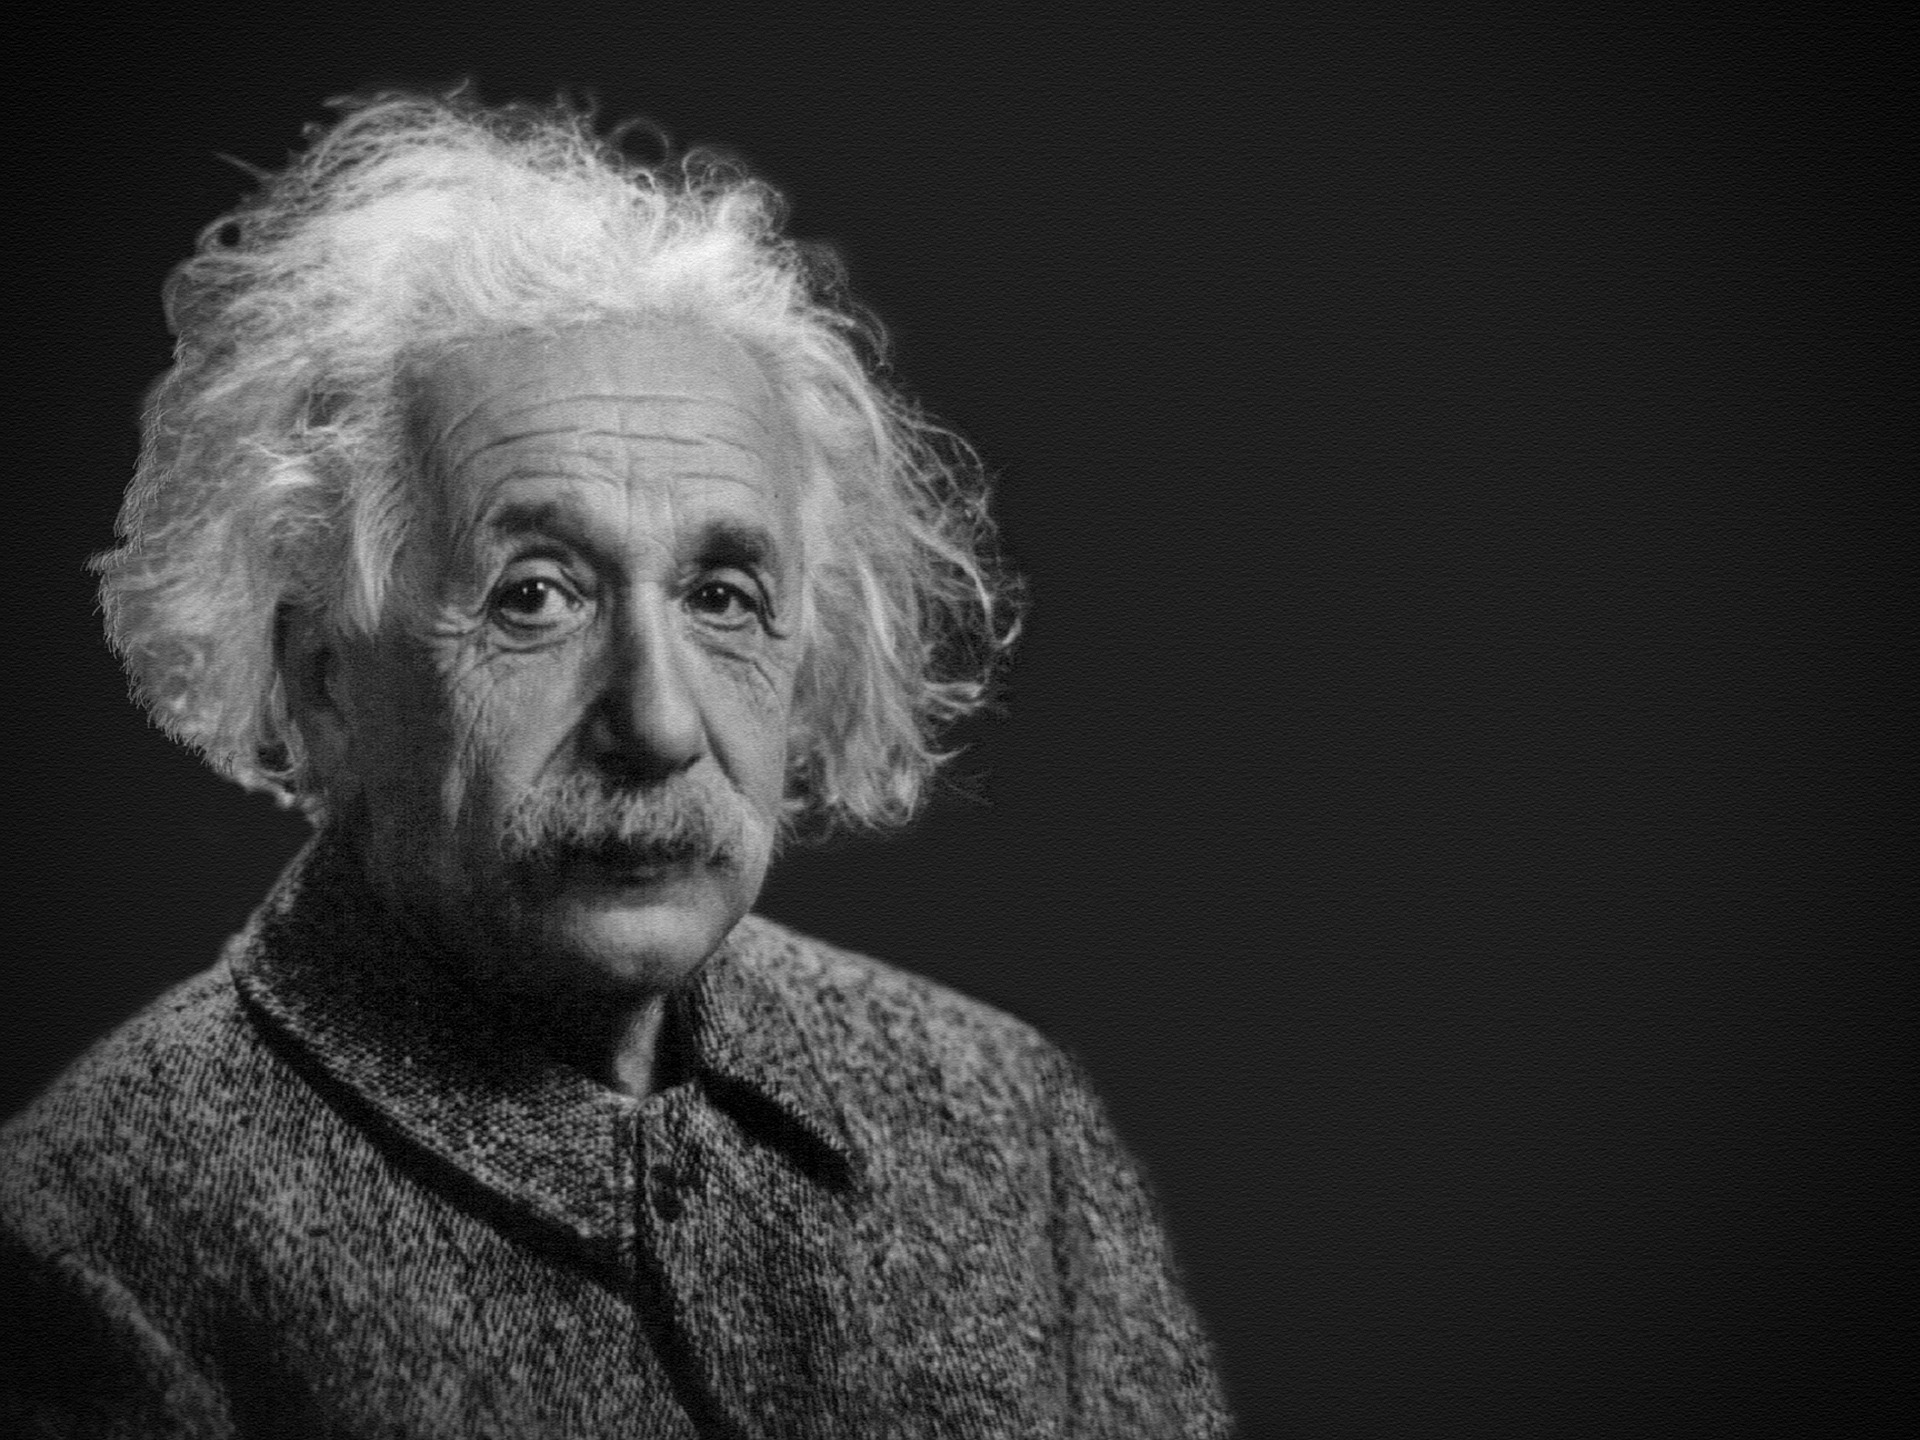 La imagen muestra al científico alemán Albert Einstein.